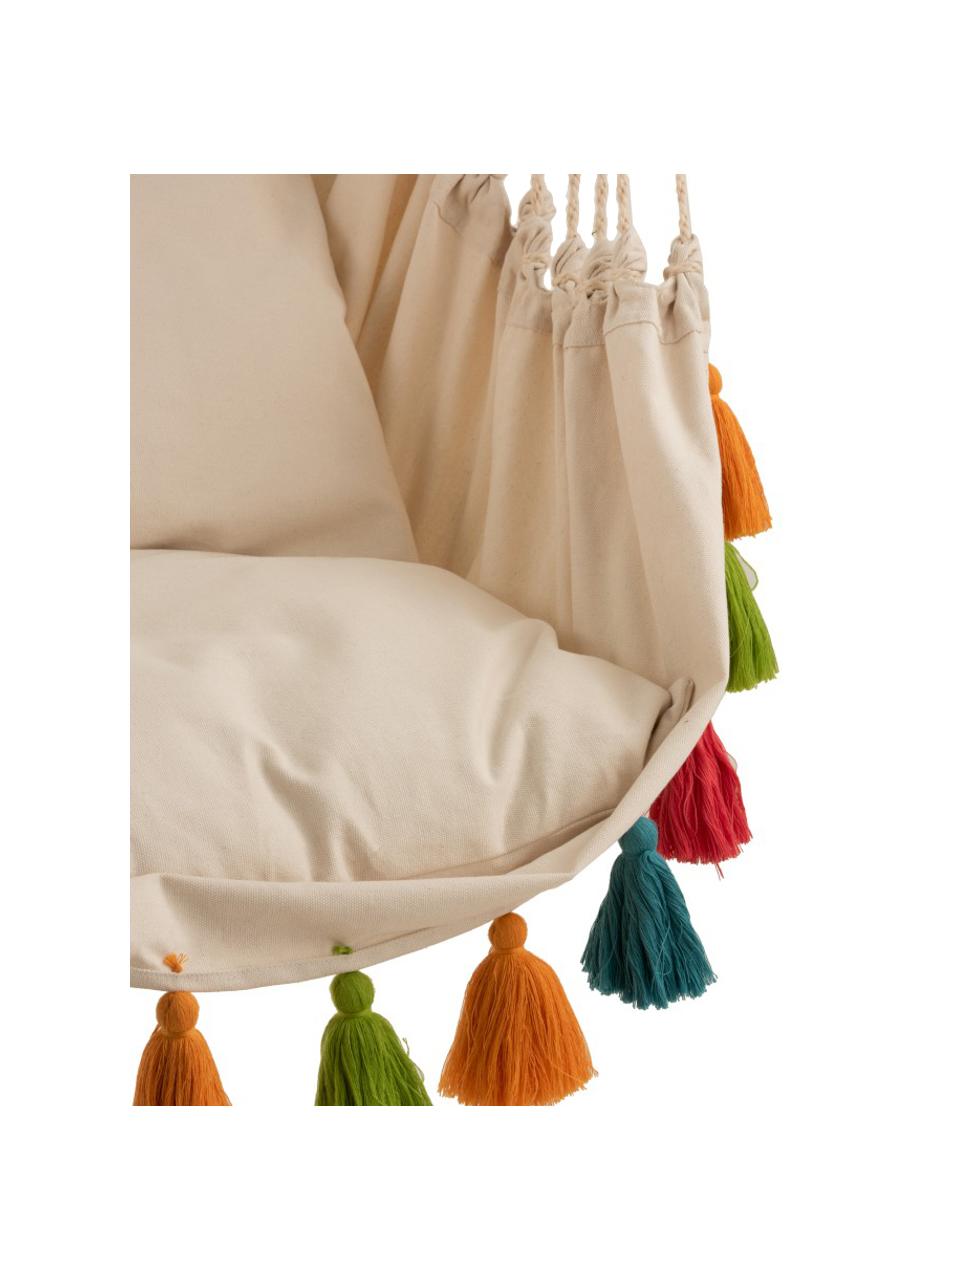 Hangstoel Quast met gekleurde franjes, Stang: hout, Crèmekleurig, multicolour, B 128 cm x H 160 cm